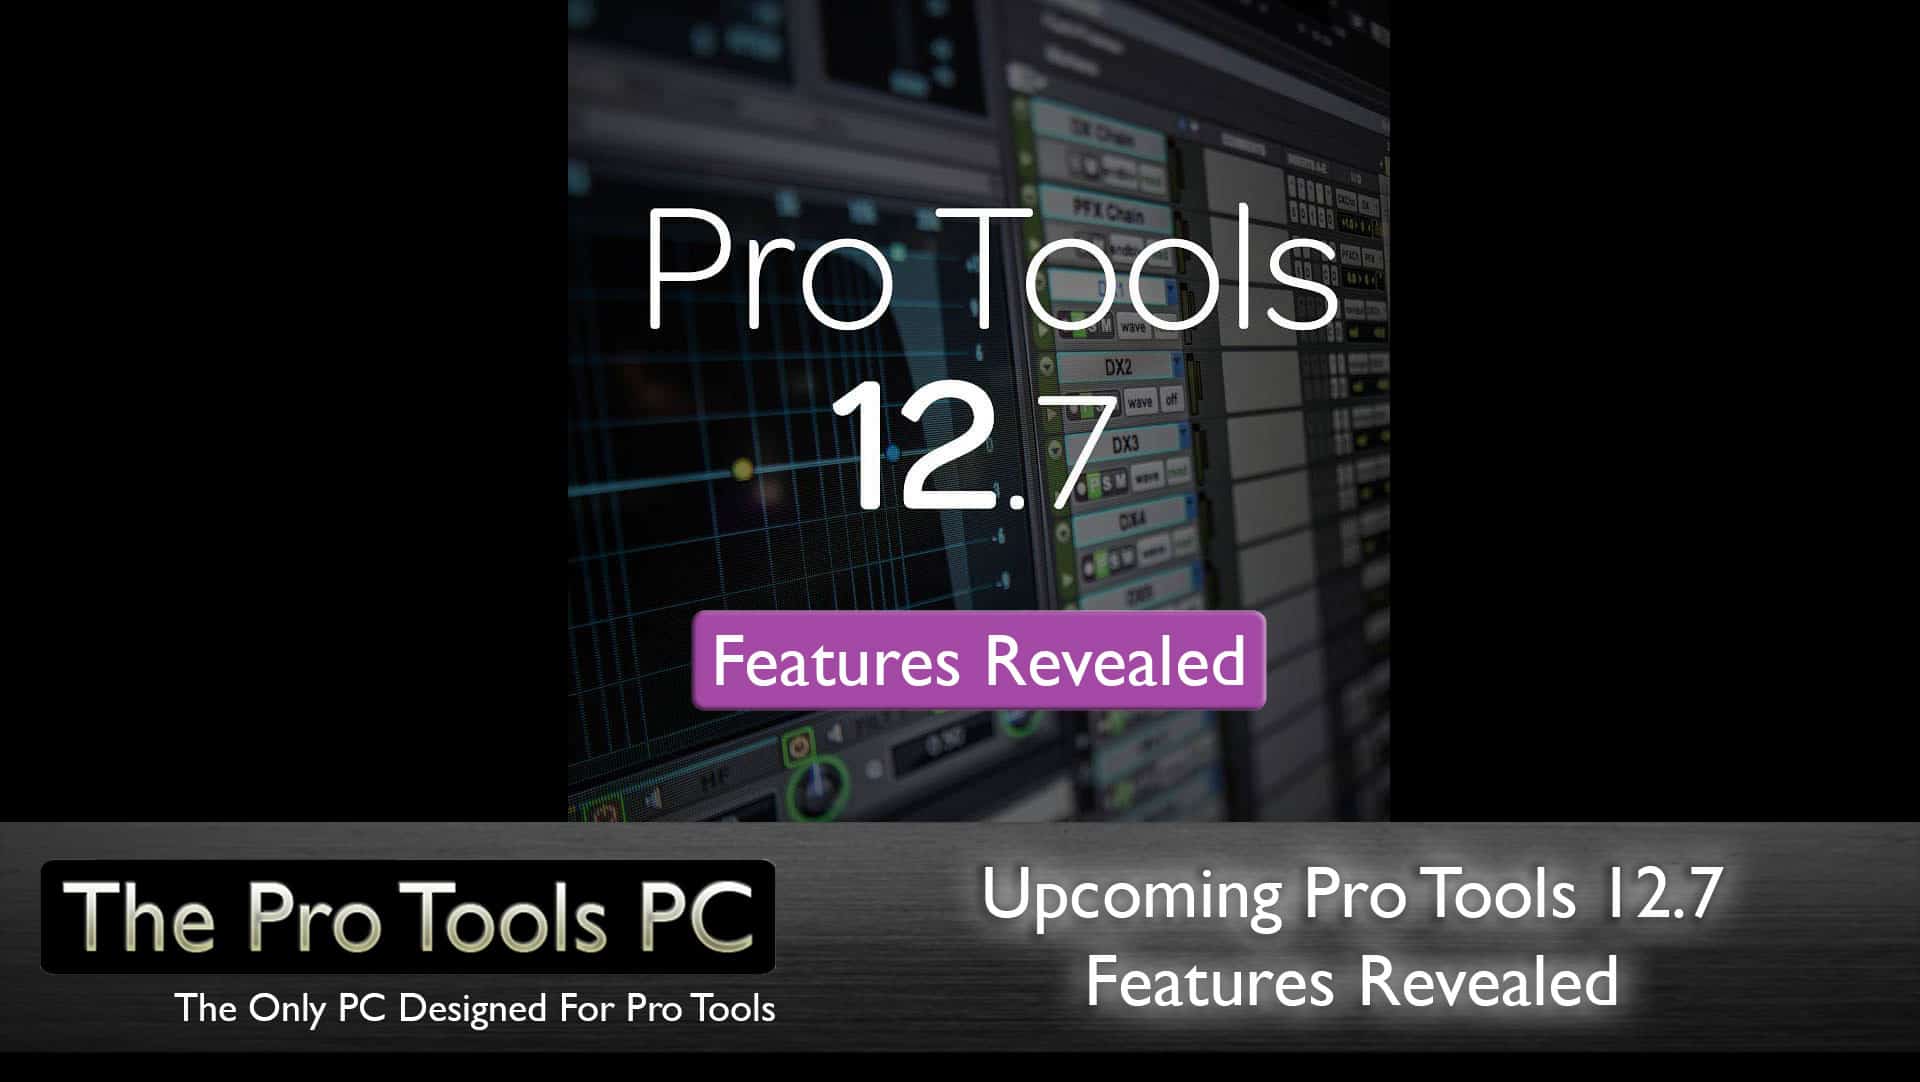 Pro tools 2019